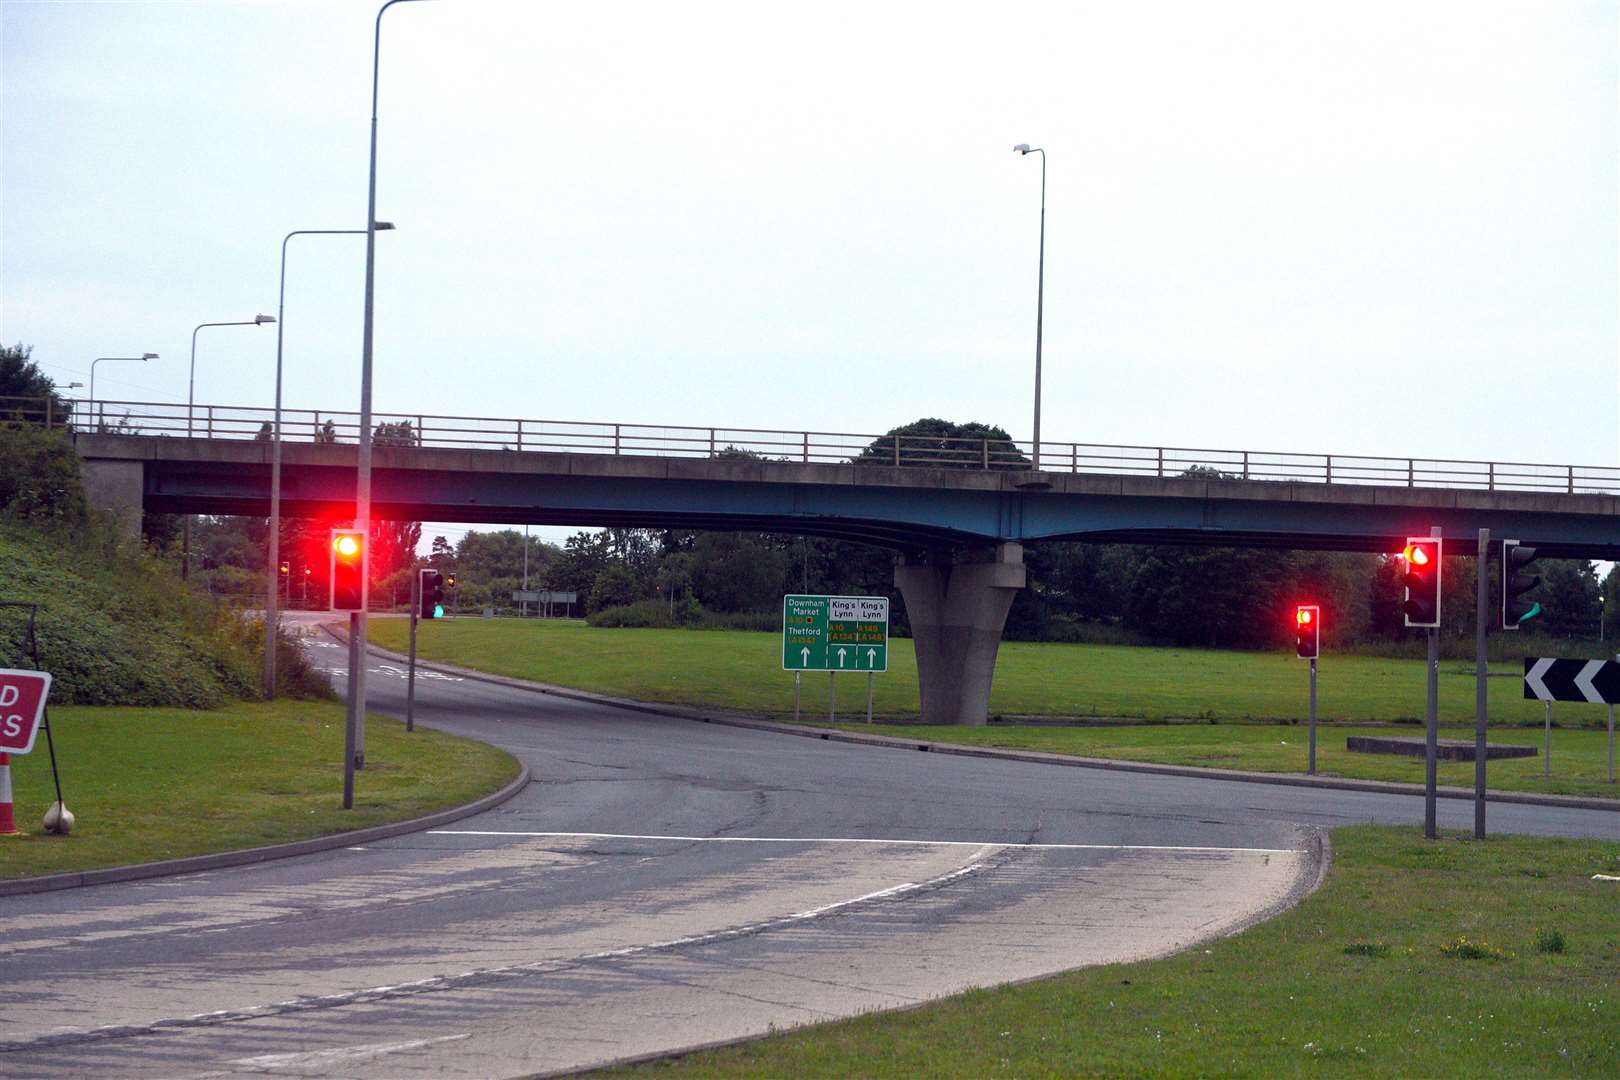 A stock image of Lynn's Hardwick roundabout